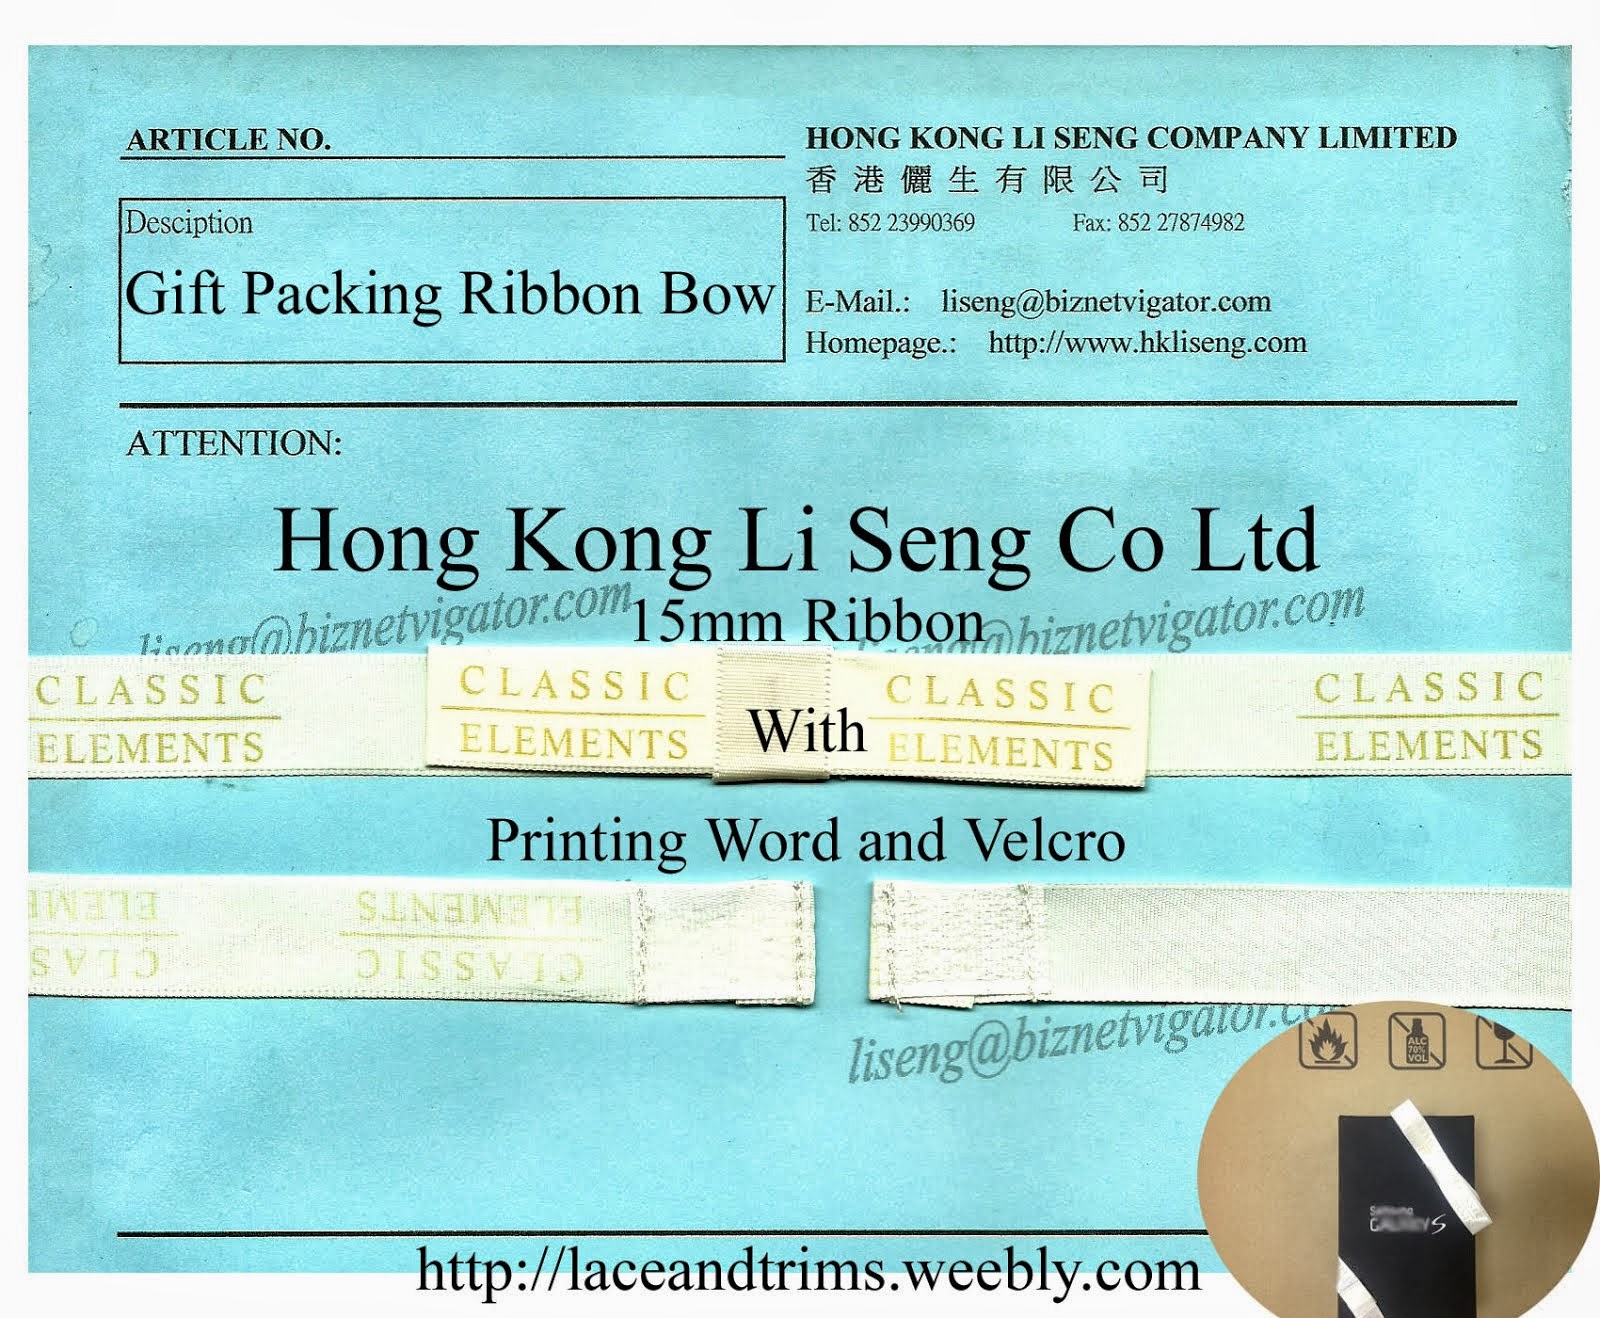 Gift Packing Ribbon Bow Manufacturer Wholesale Supplier Hong Kong Li Seng Co Ltd